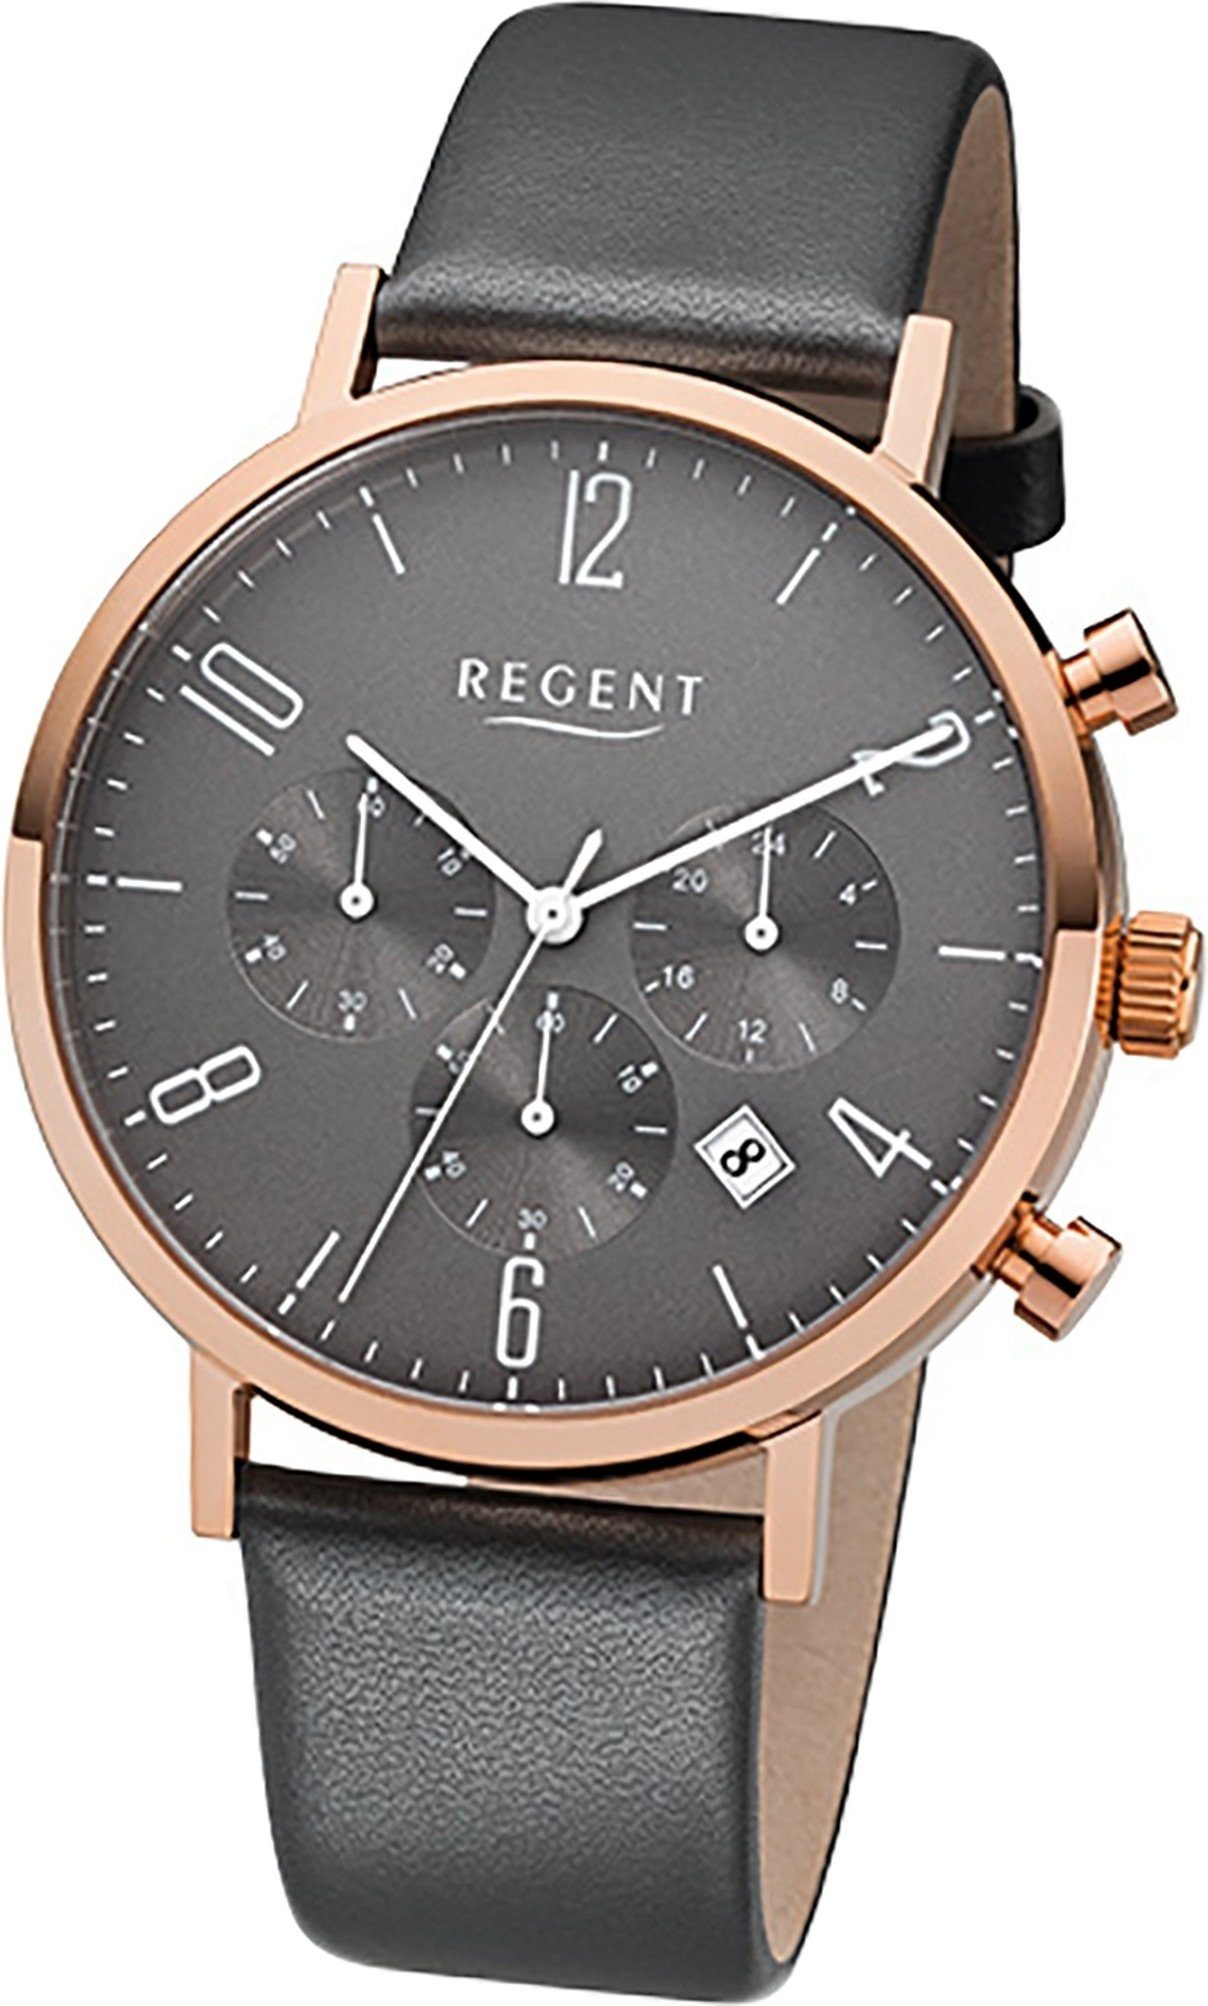 Regent Chronograph (ca. Regent Quarzuhr, anthrazit, Lederarmband Leder Uhr F-1038 Herren groß rundes 42mm) Herrenuhr Gehäuse